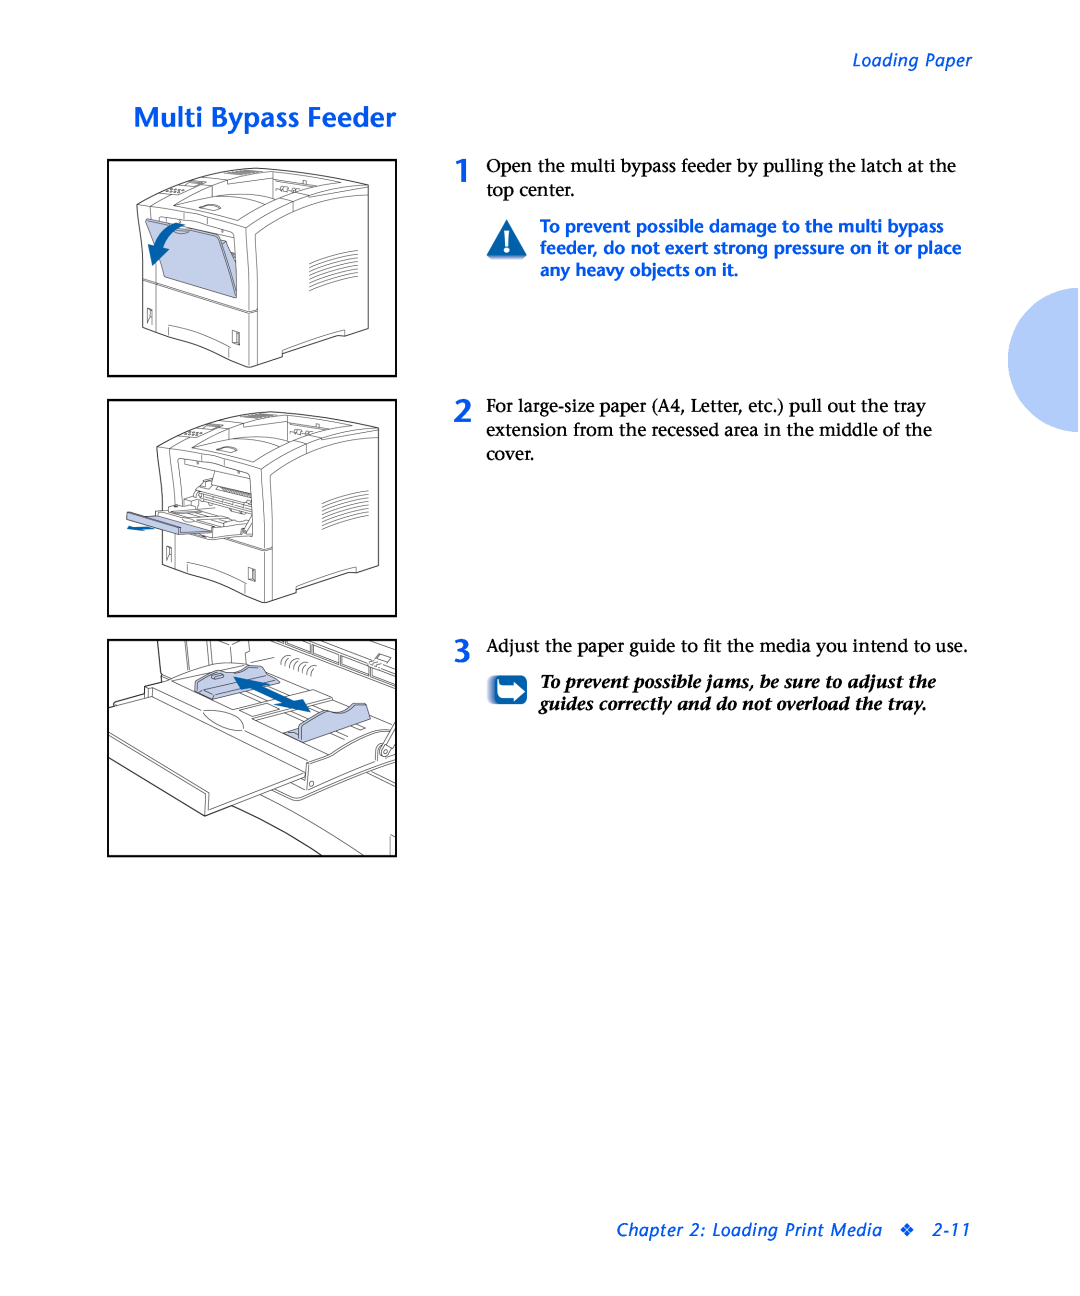 Xerox N2125 manual Multi Bypass Feeder, Loading Paper, Loading Print Media 